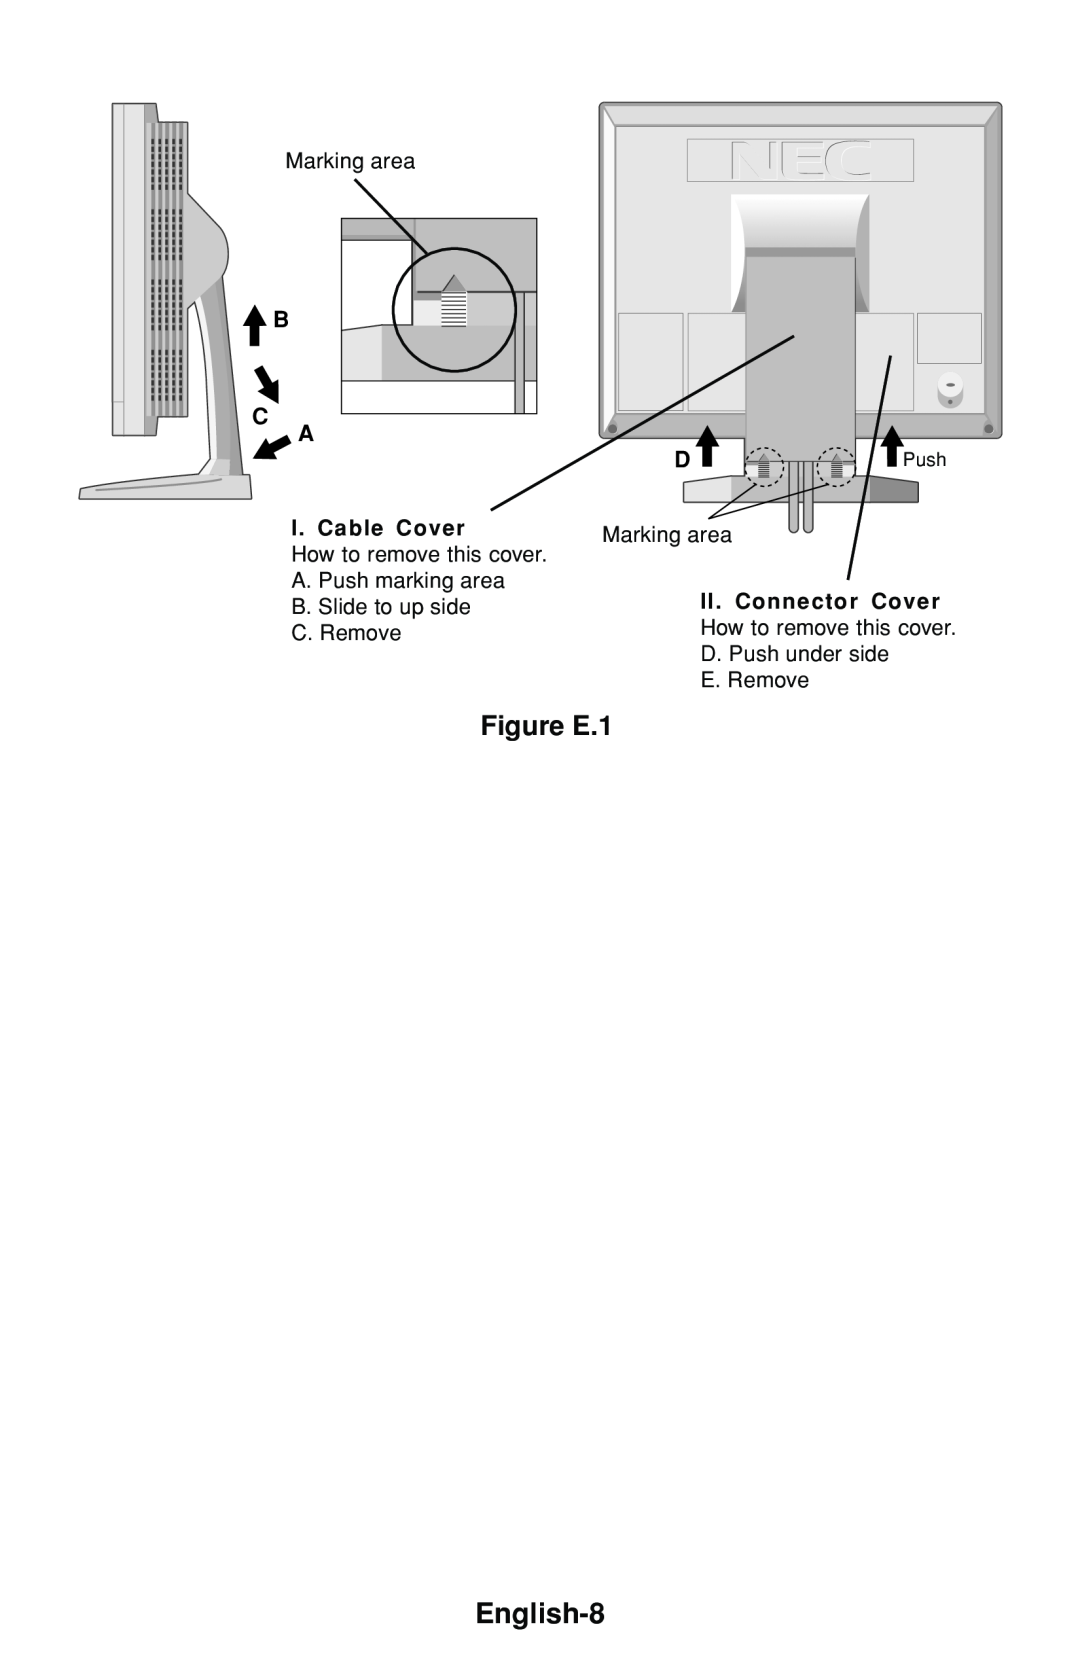 NEC LCD1530V user manual English-8, Figure E.1 